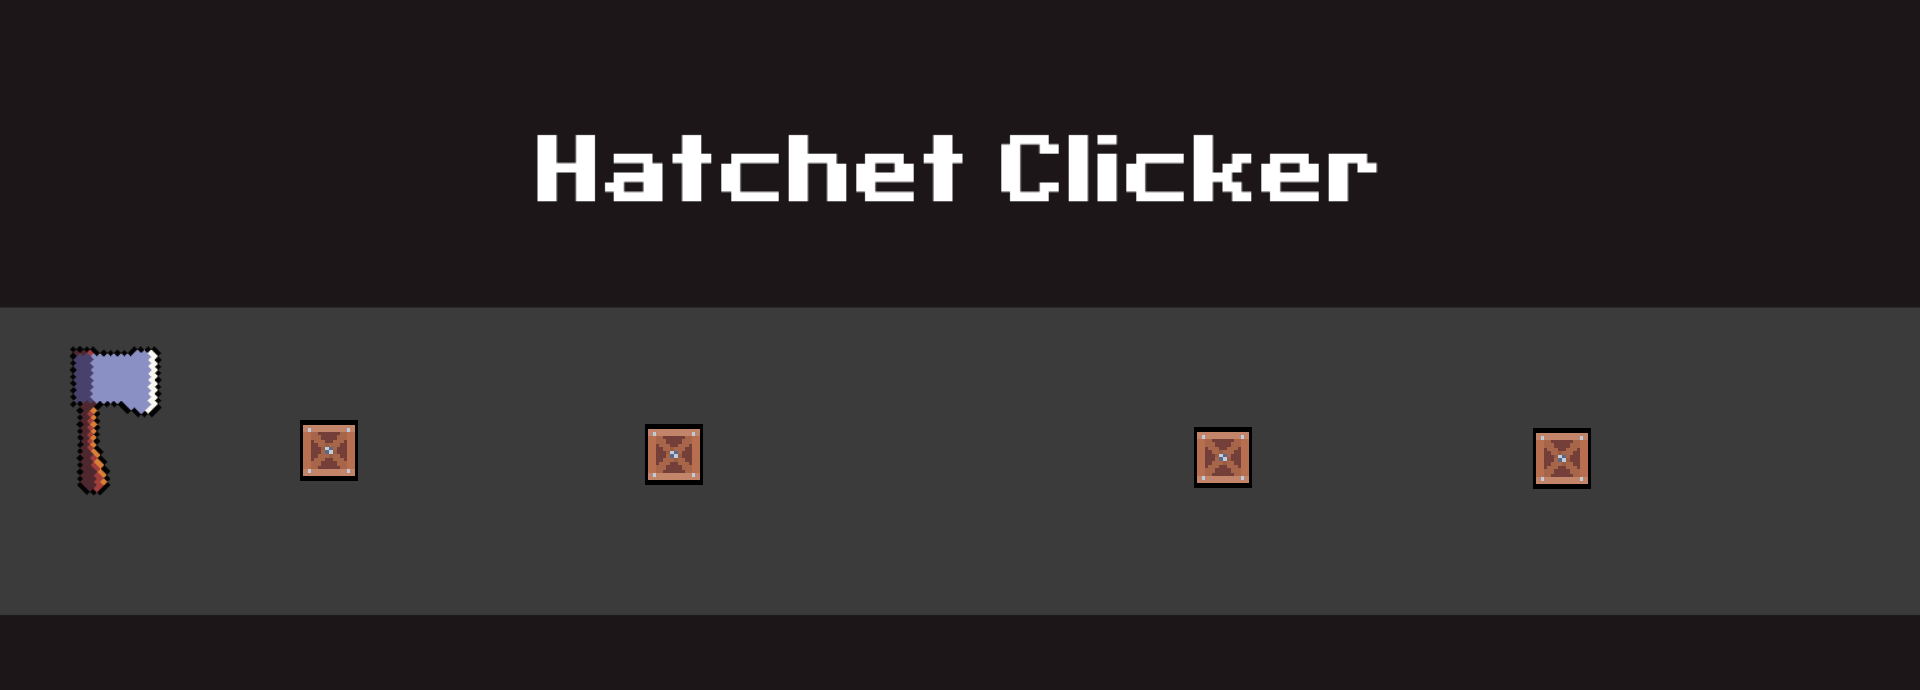 HatchetClicker